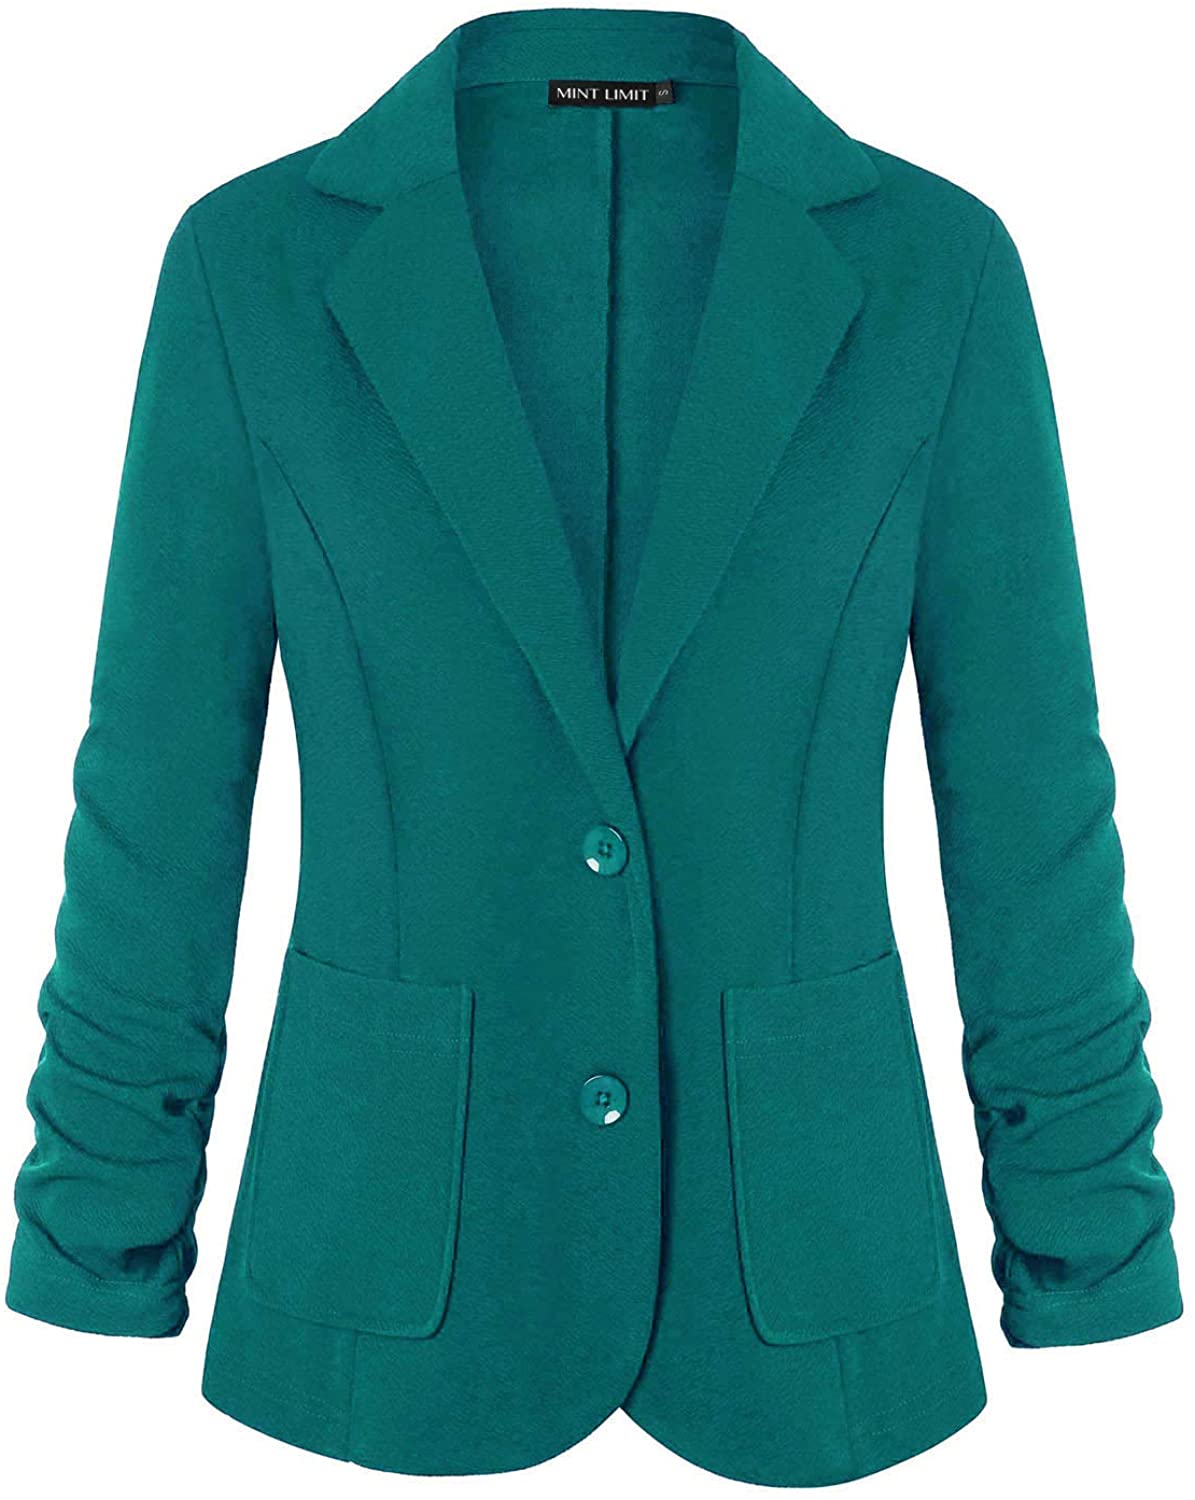 Unifizz Womens Casual Work Office Blazer Pockets Buttons Suit Jacket 3/4 Sleeve 